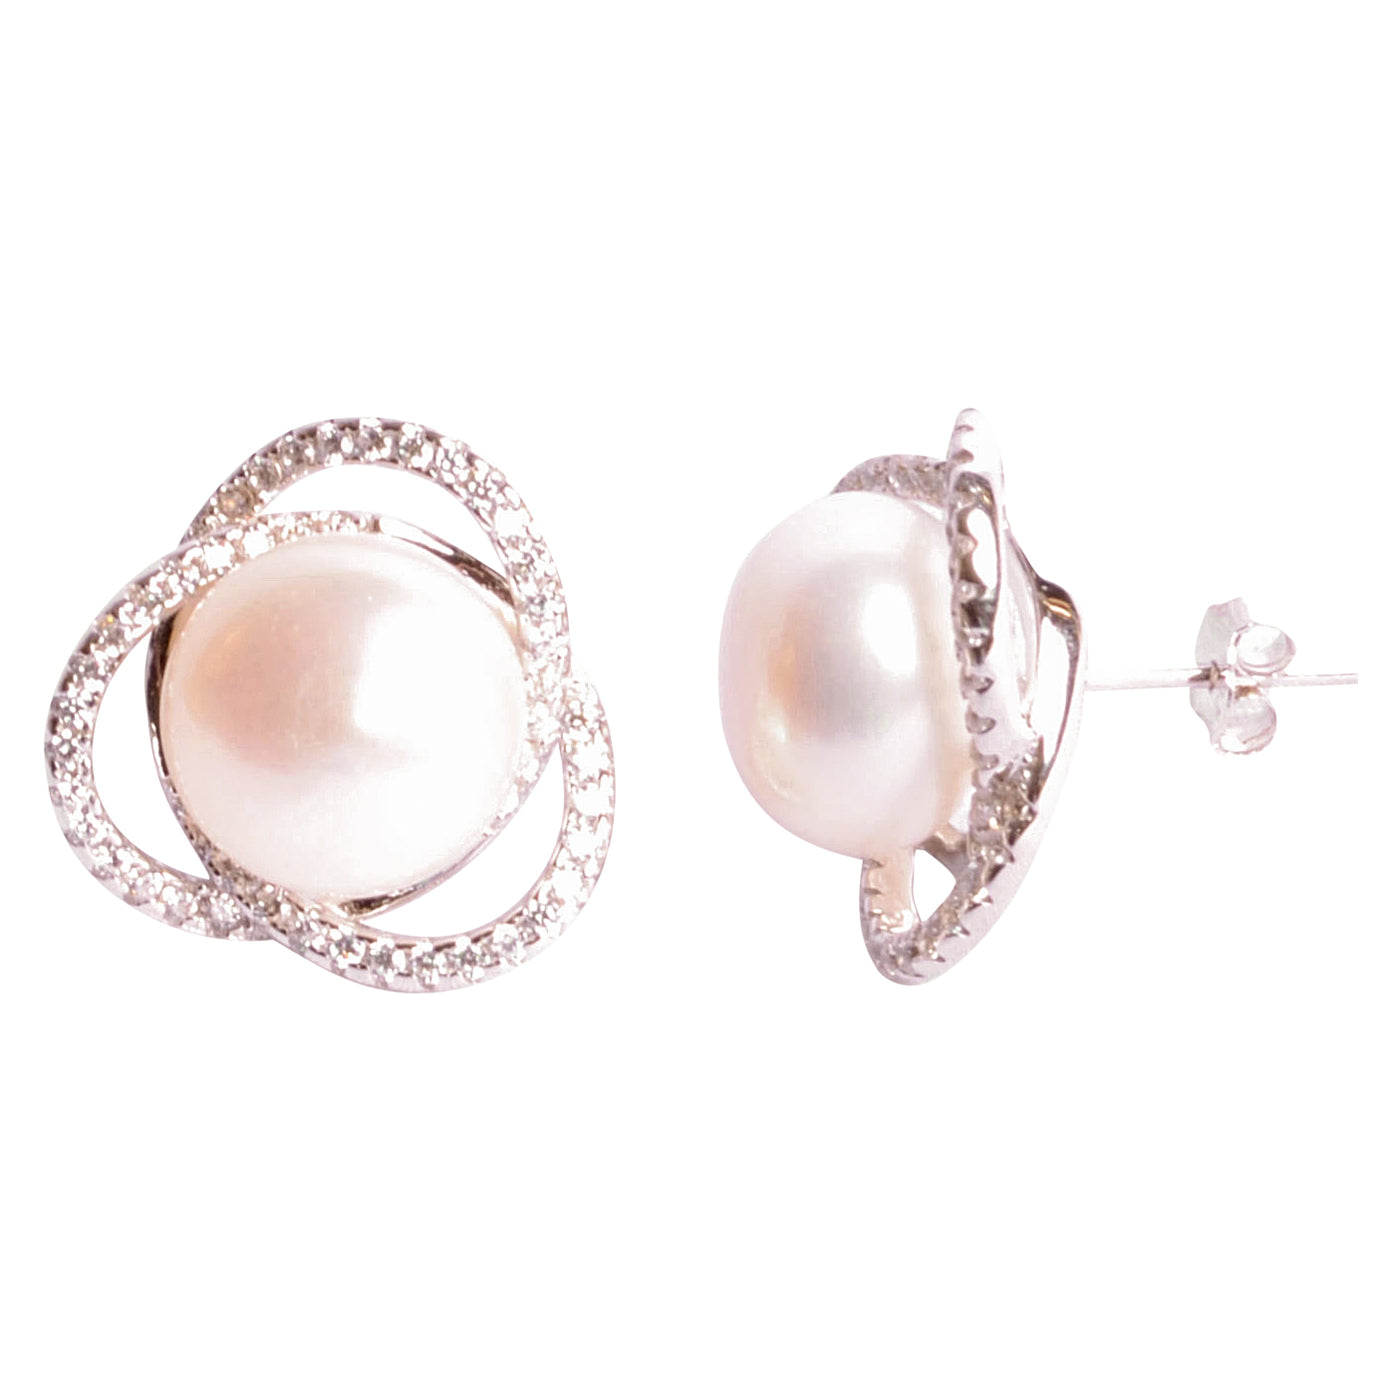 White Pearl & Crystal Sterling Silver Earrings | SilverAndGold